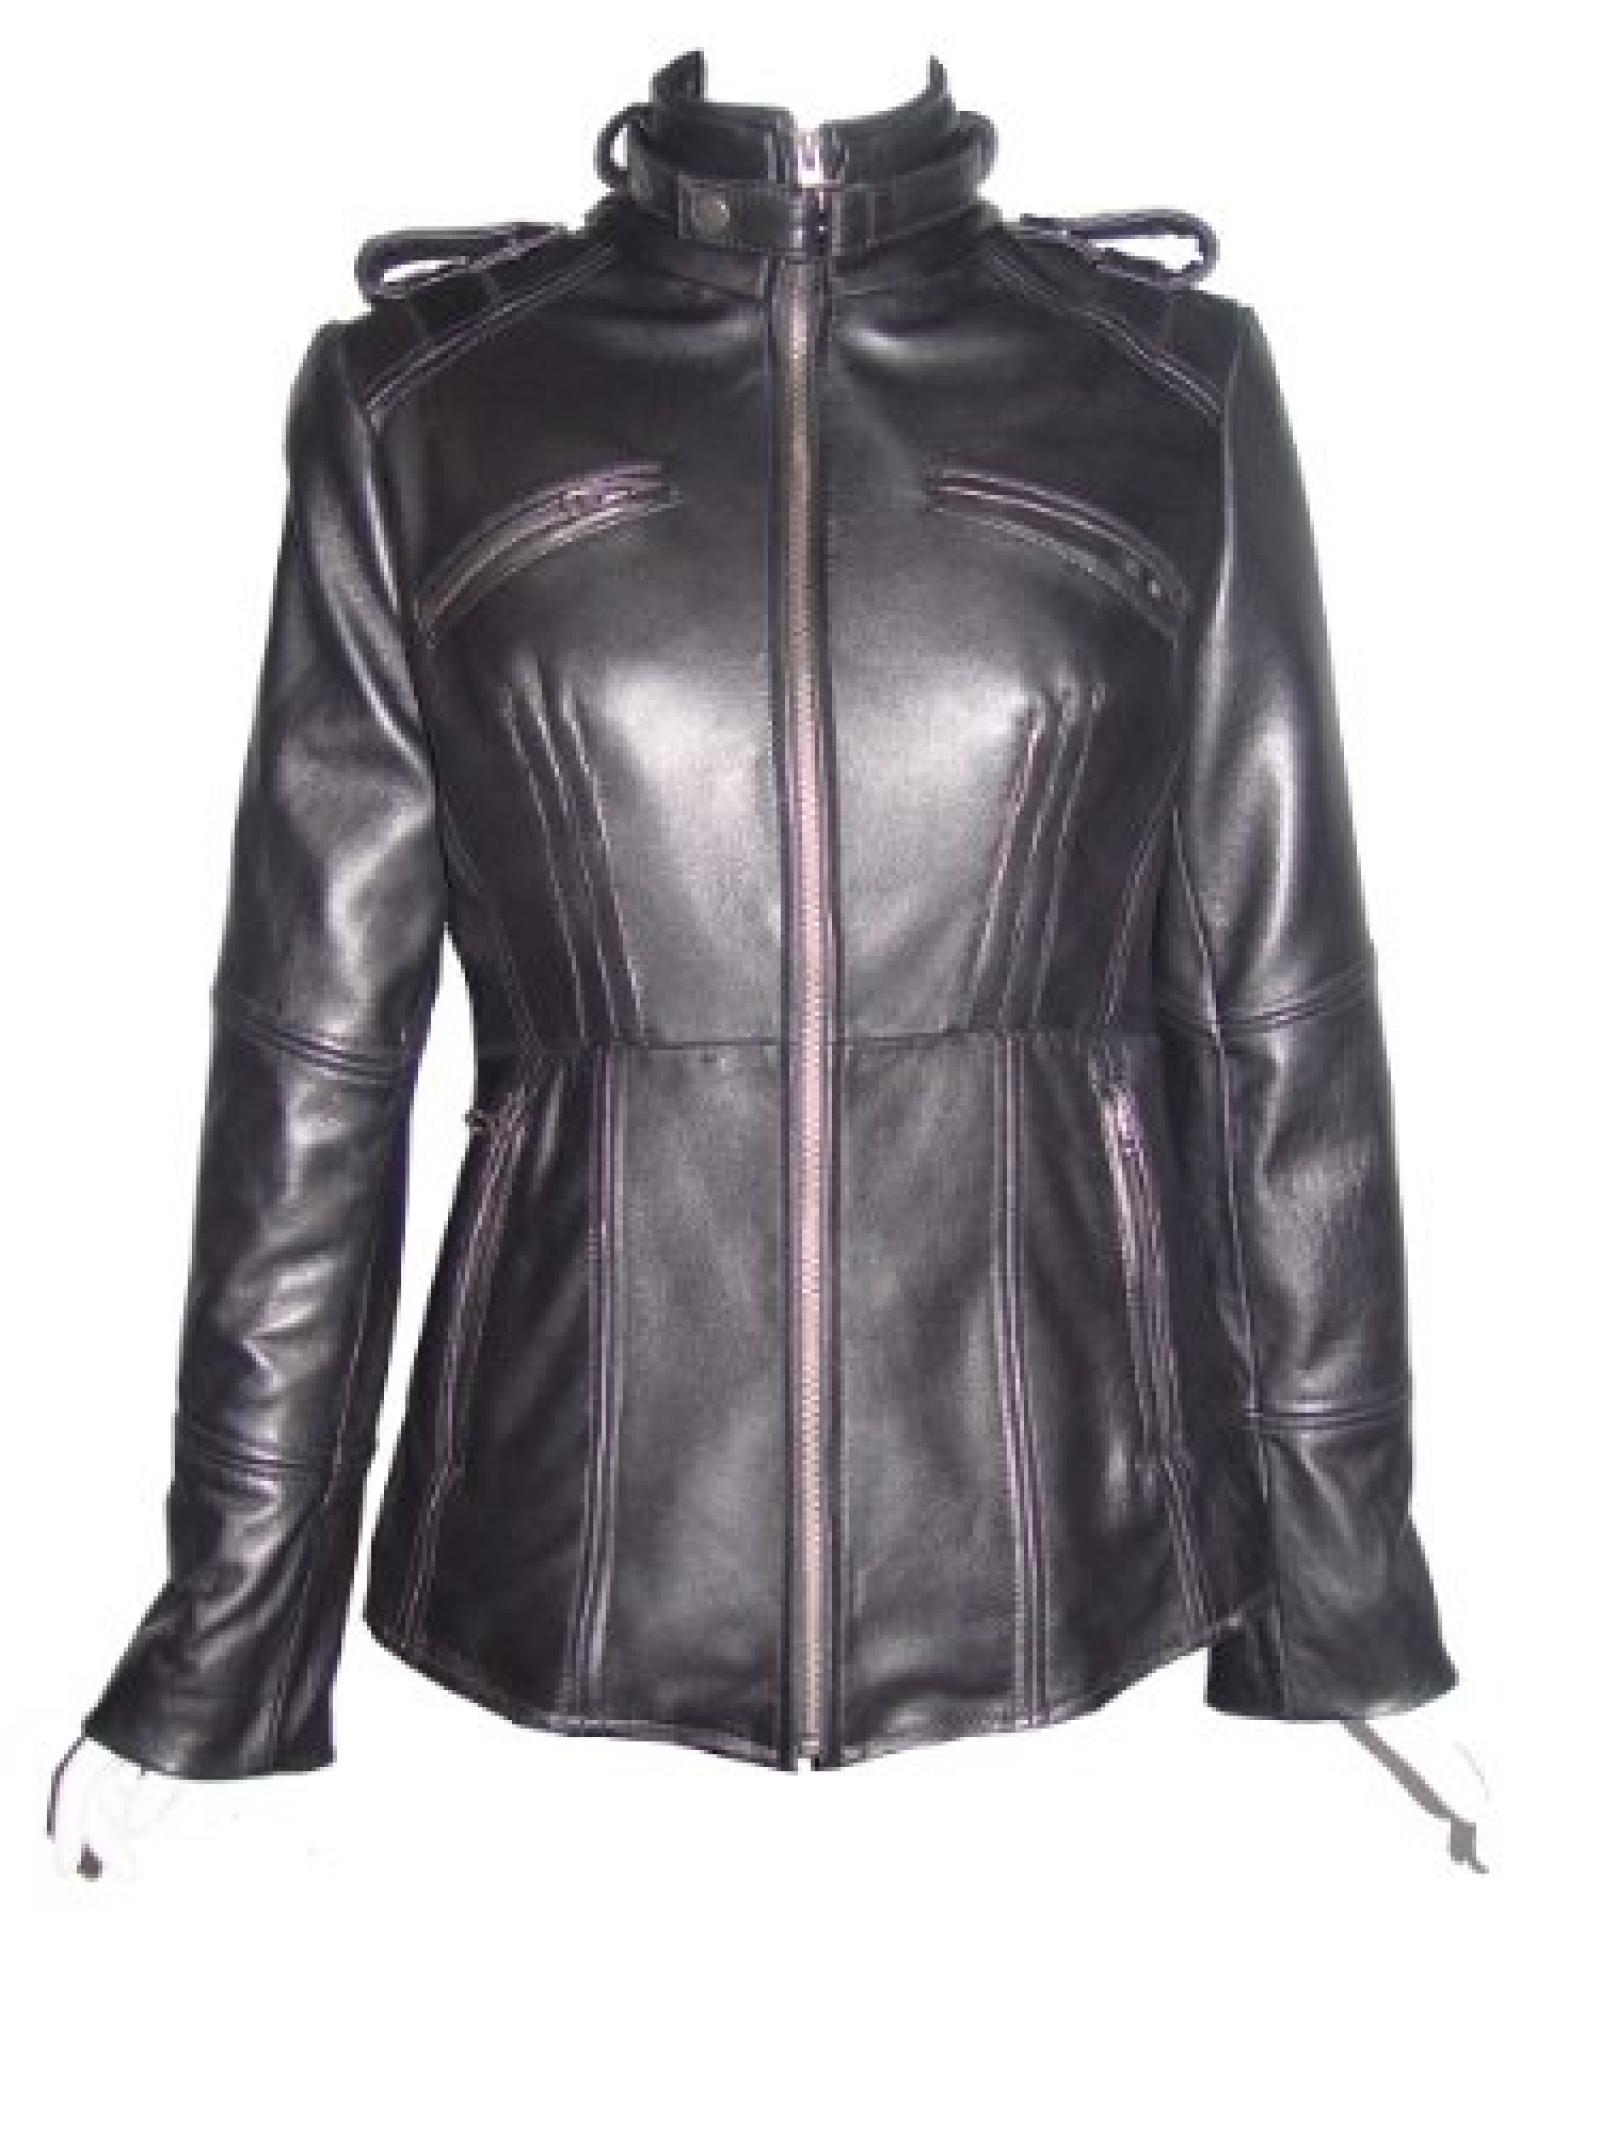 Nettailor Women PLUS SIZE 4205 Leather Casual Jacket Placket Zip Front Welt Pocket 